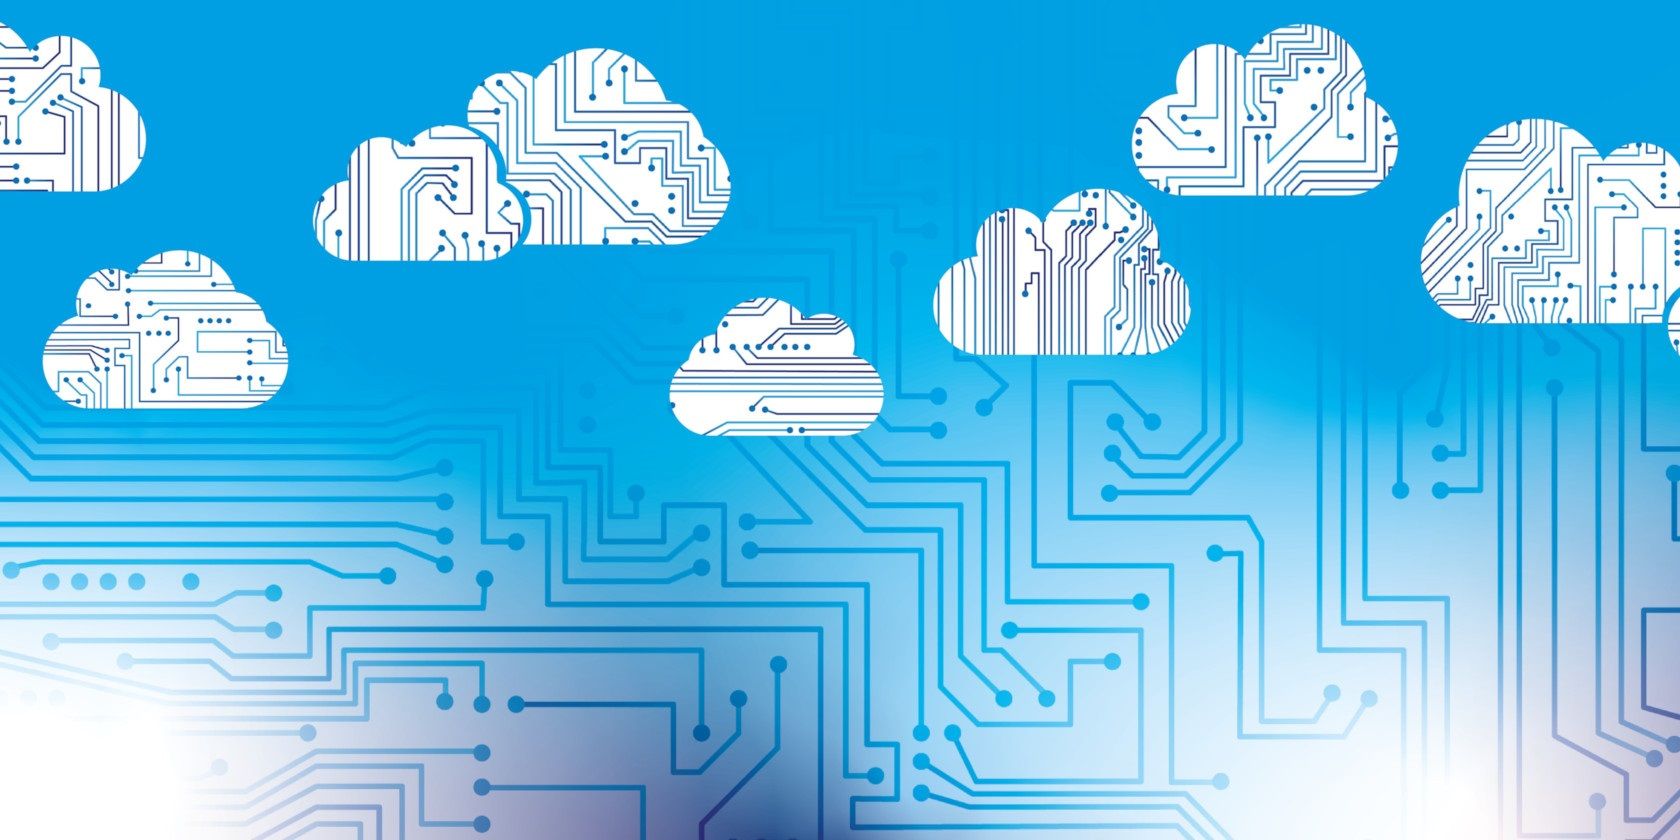 Cloud storage symbols with connection panels